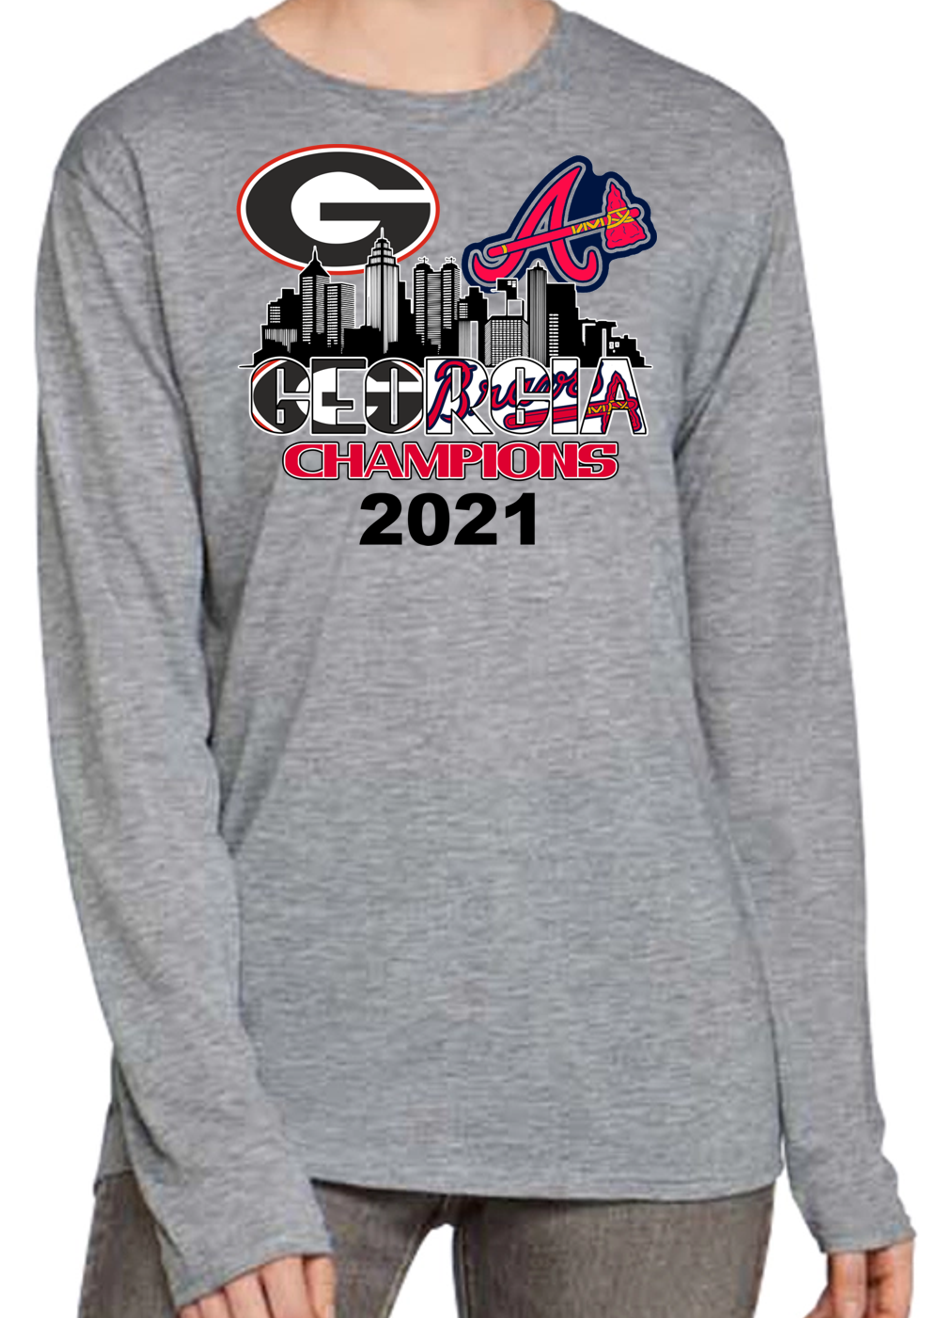 2021 Champions UGA Bulldogs Braves Unisex T Shirt